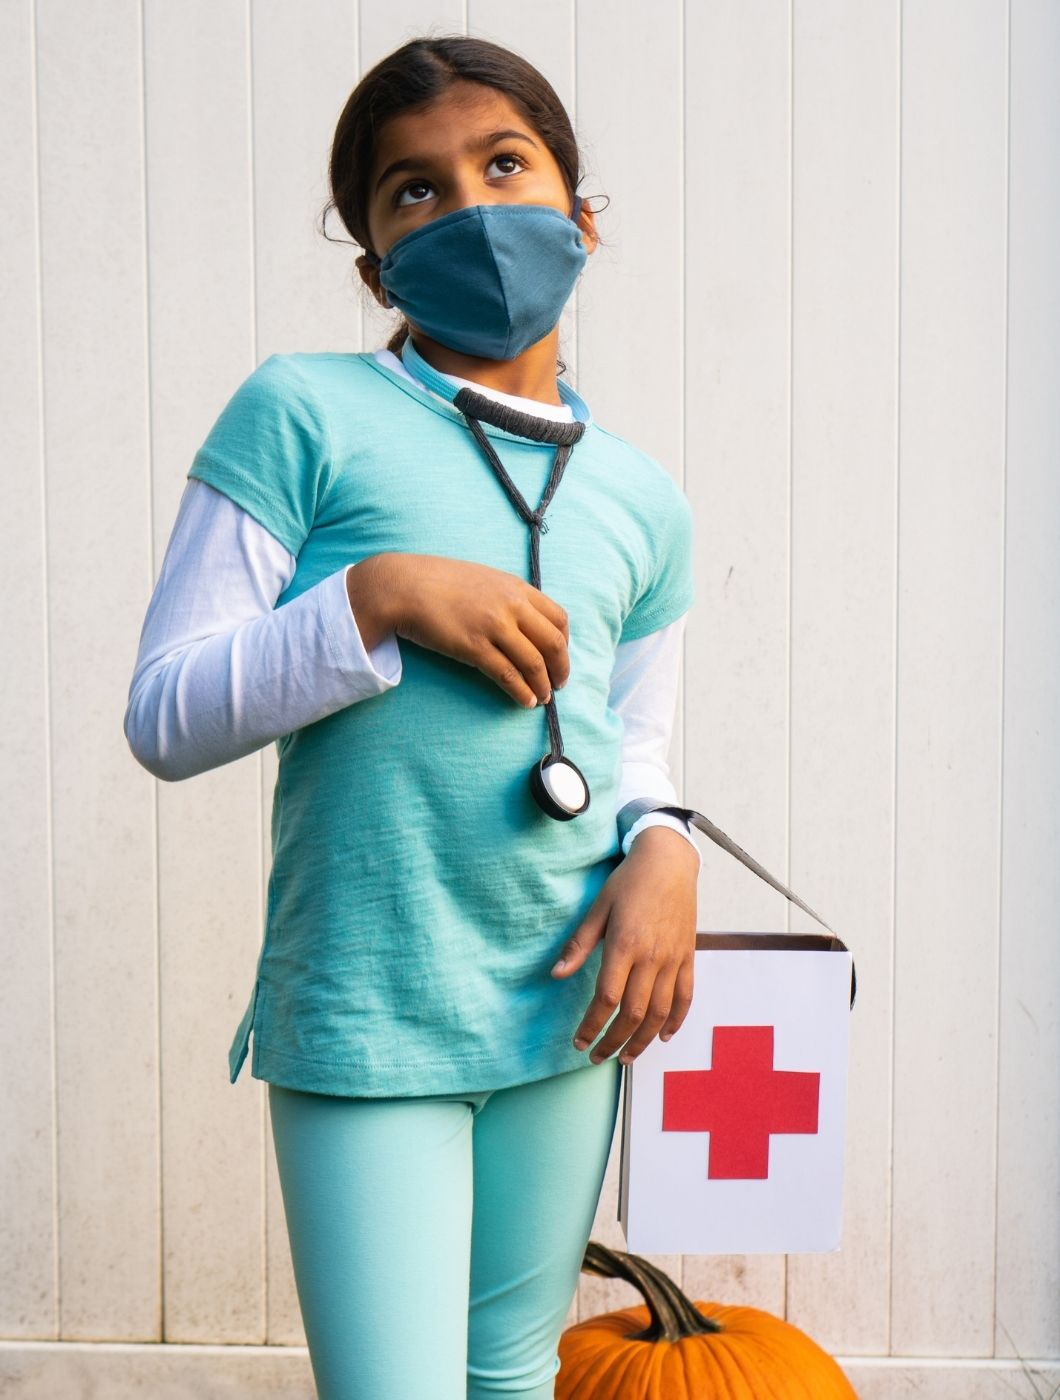 nurse costume for kids